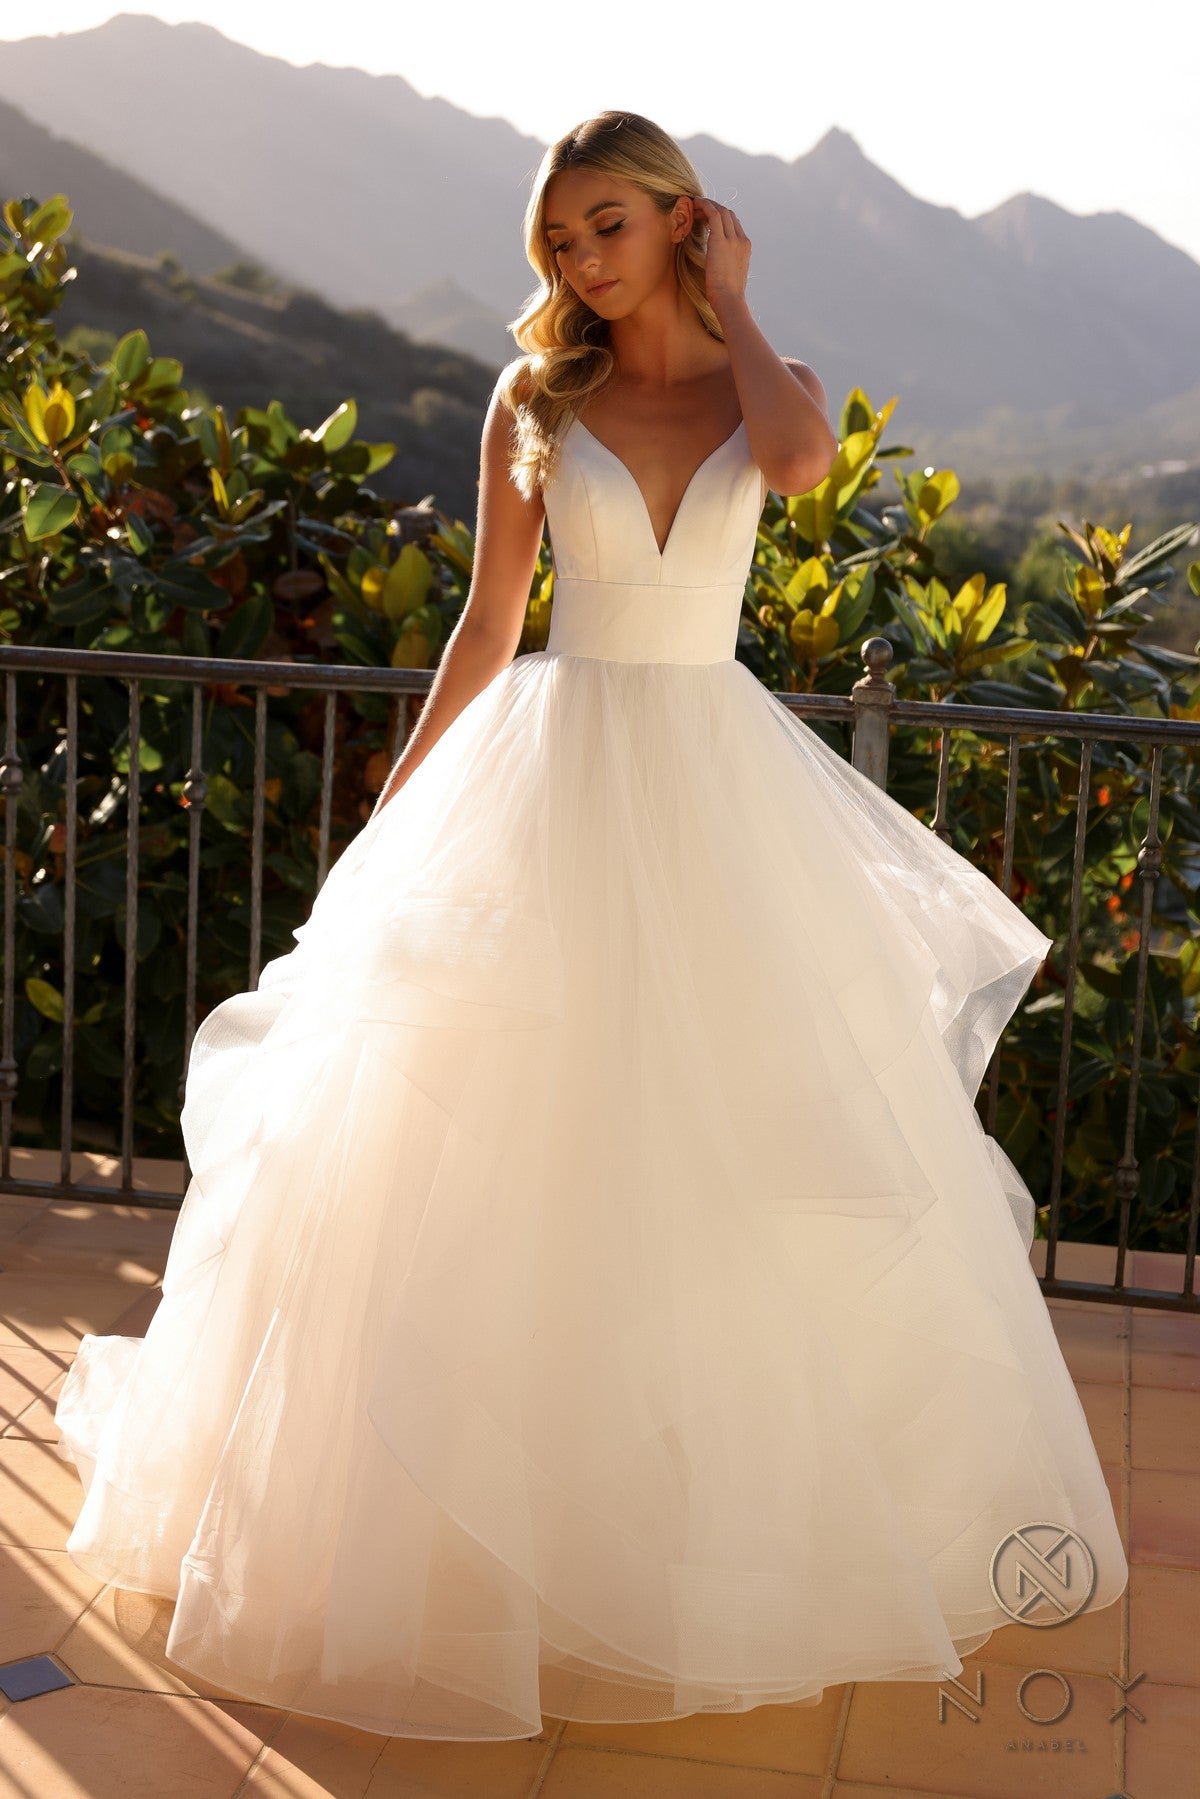 Nox Anabel -JE997 Sleeveless Layered Wedding Gown